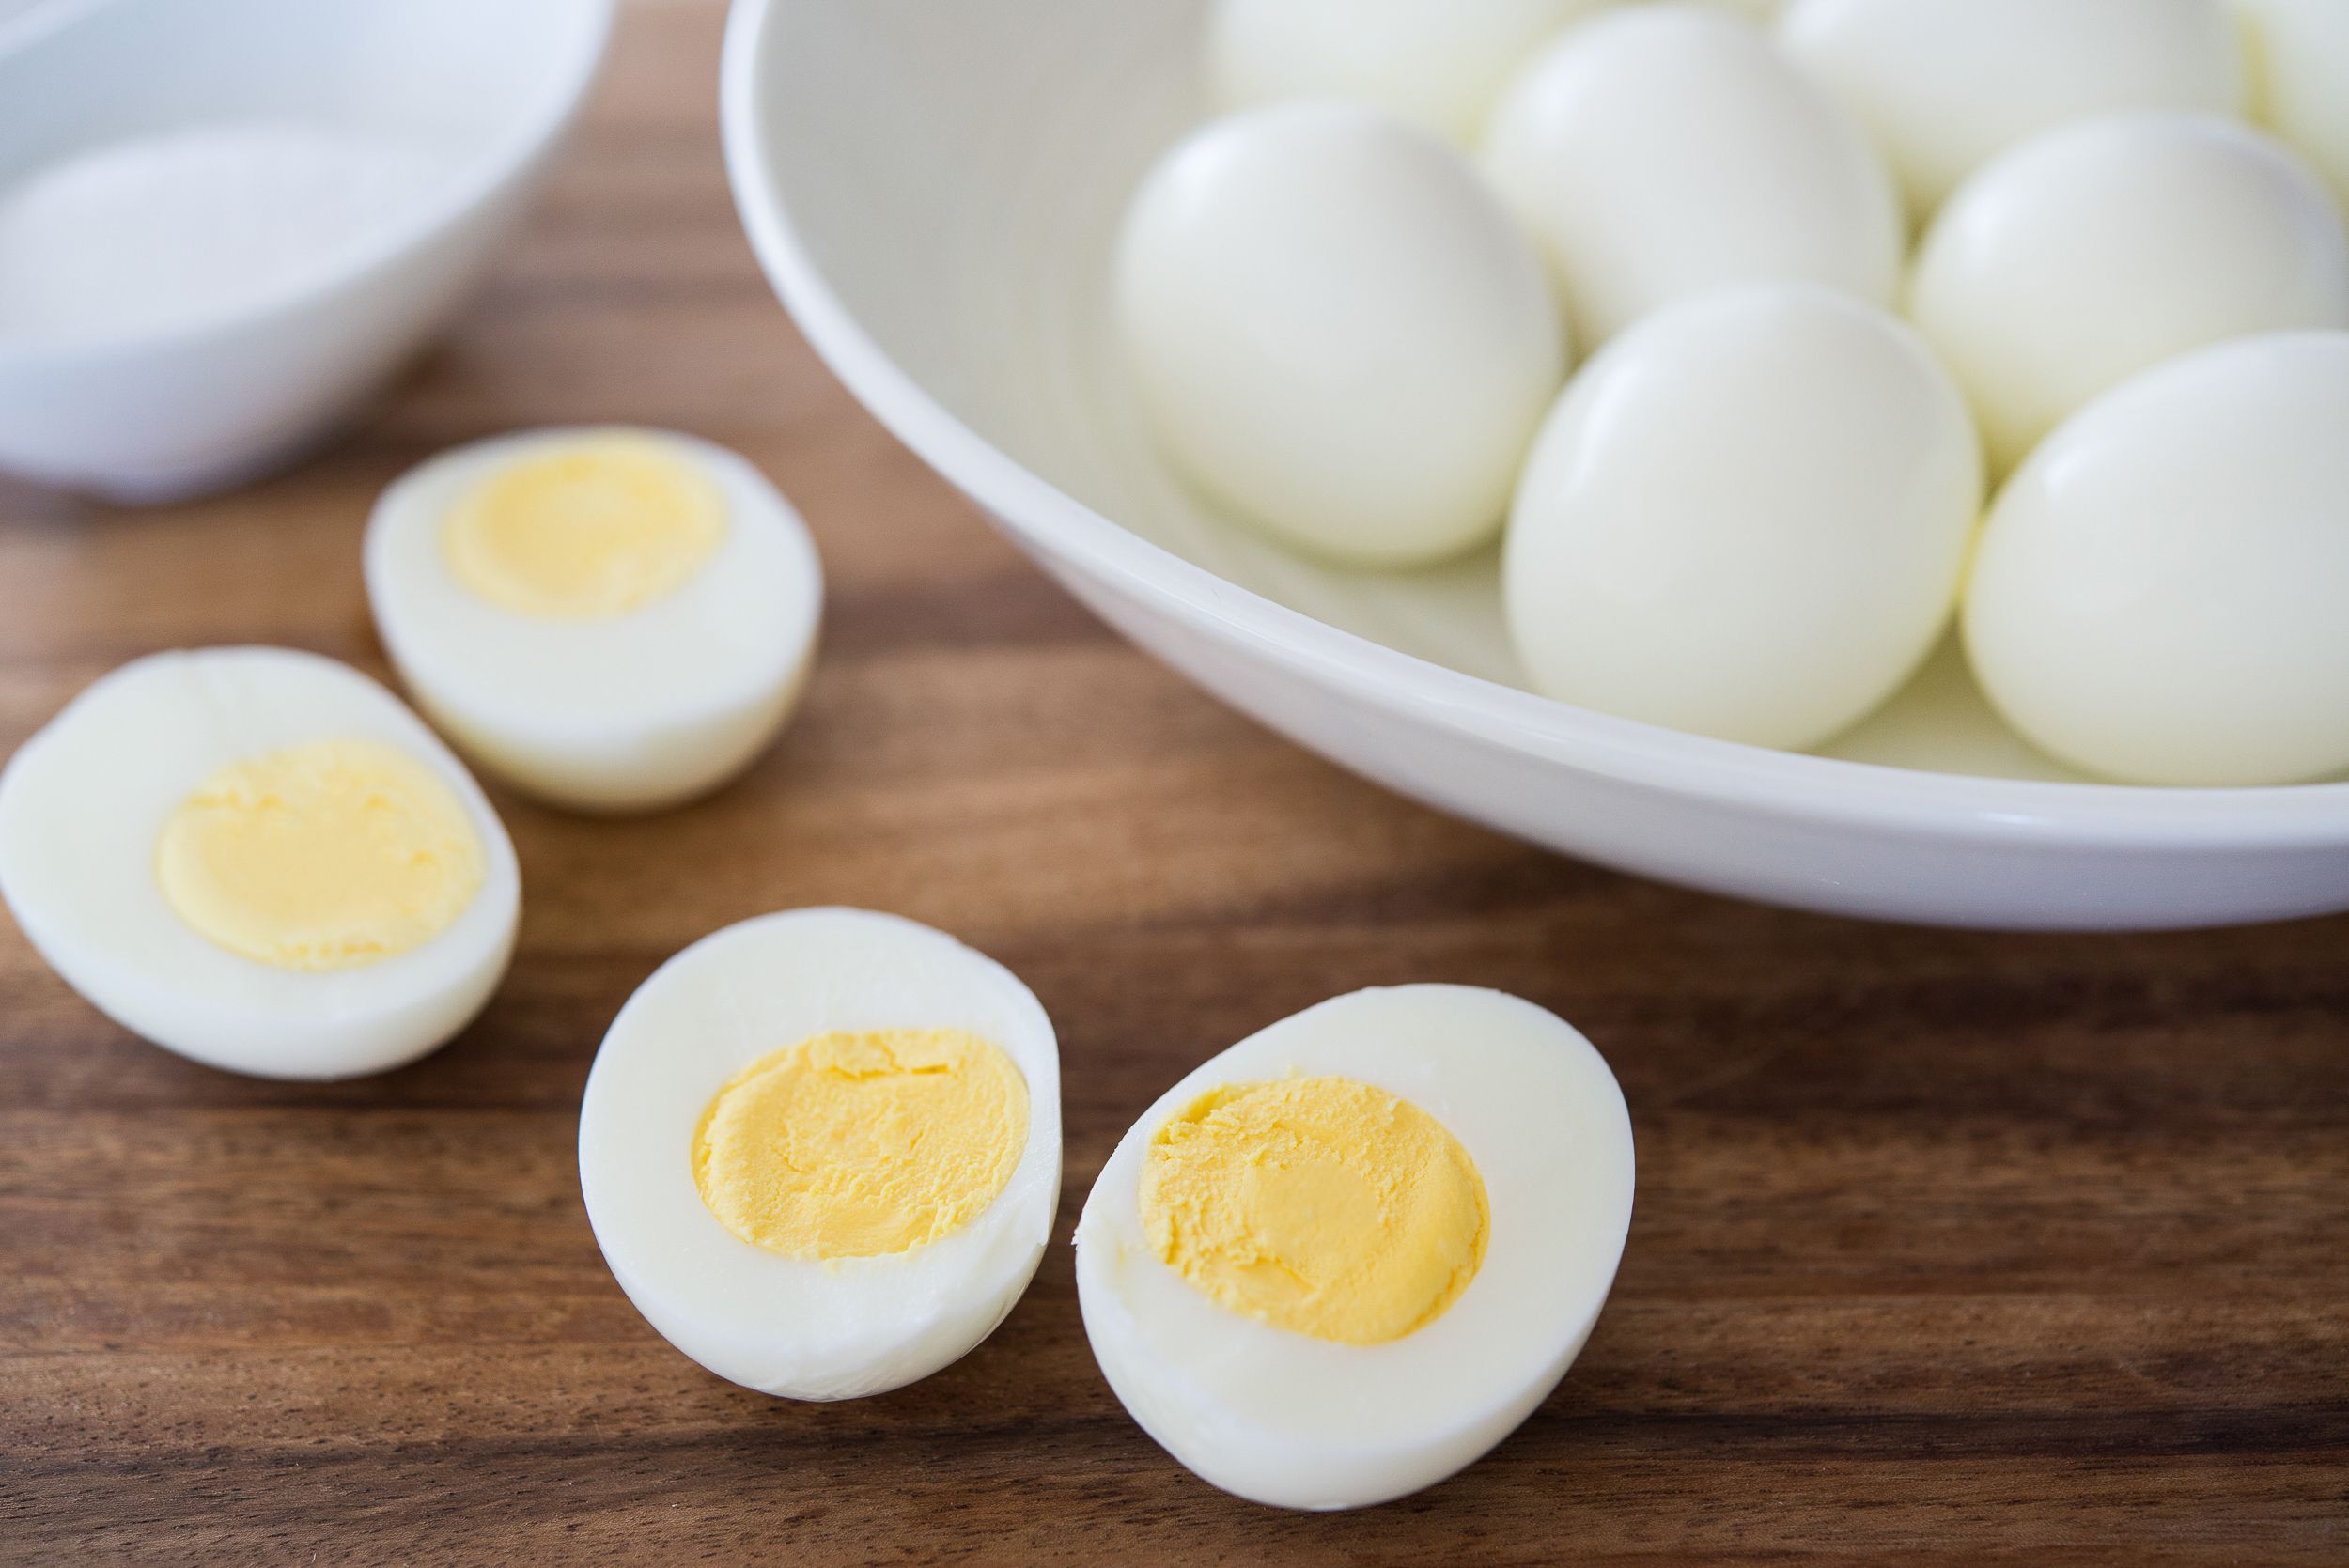 Easy-to-Peel Eggs Recipe - How to Make Hard-Boiled Eggs